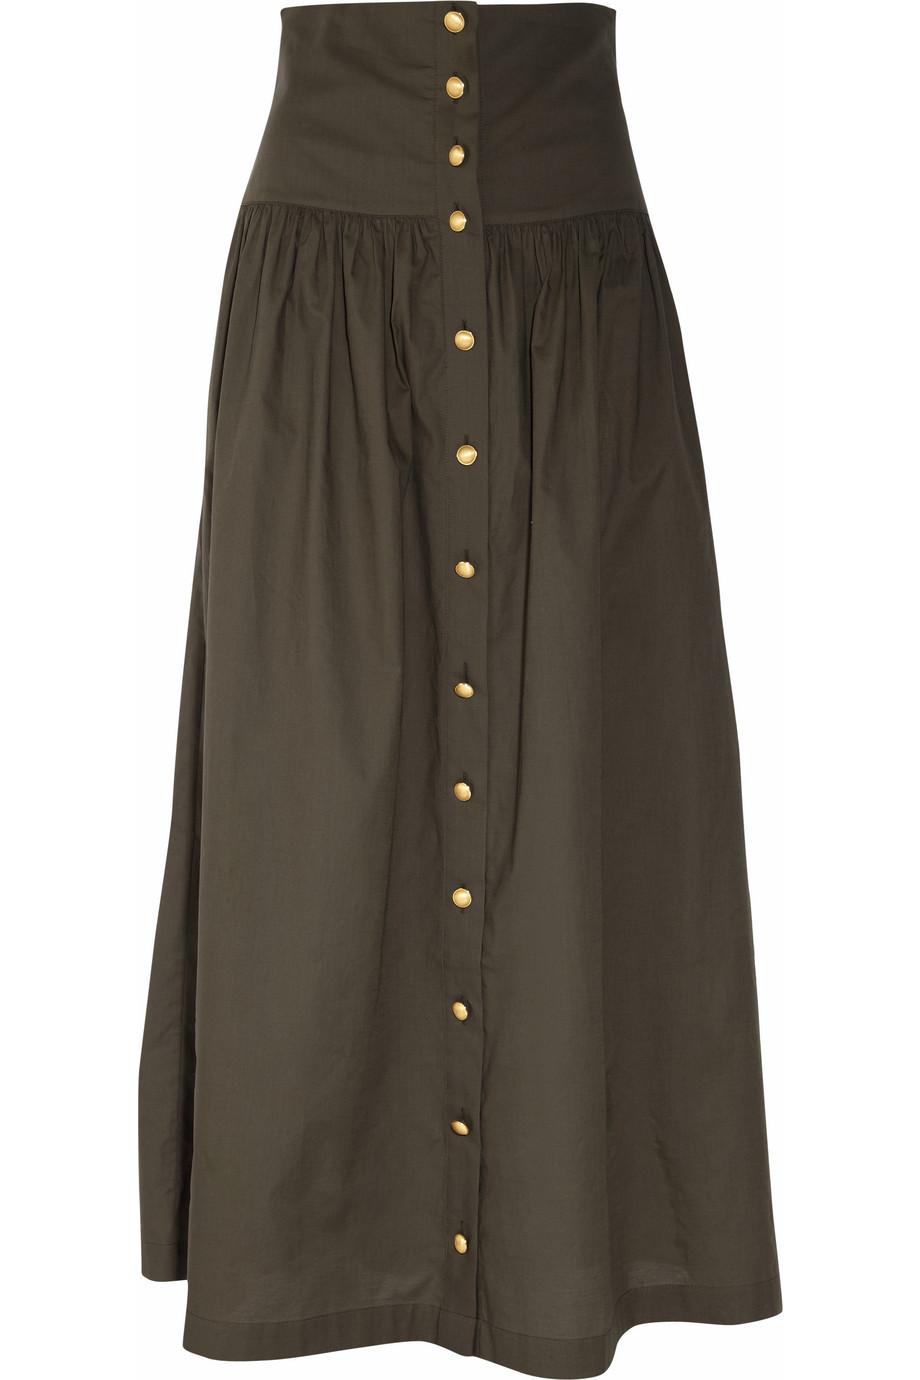 Paul & Joe Cotton Maxi Skirt in Khaki | Lyst